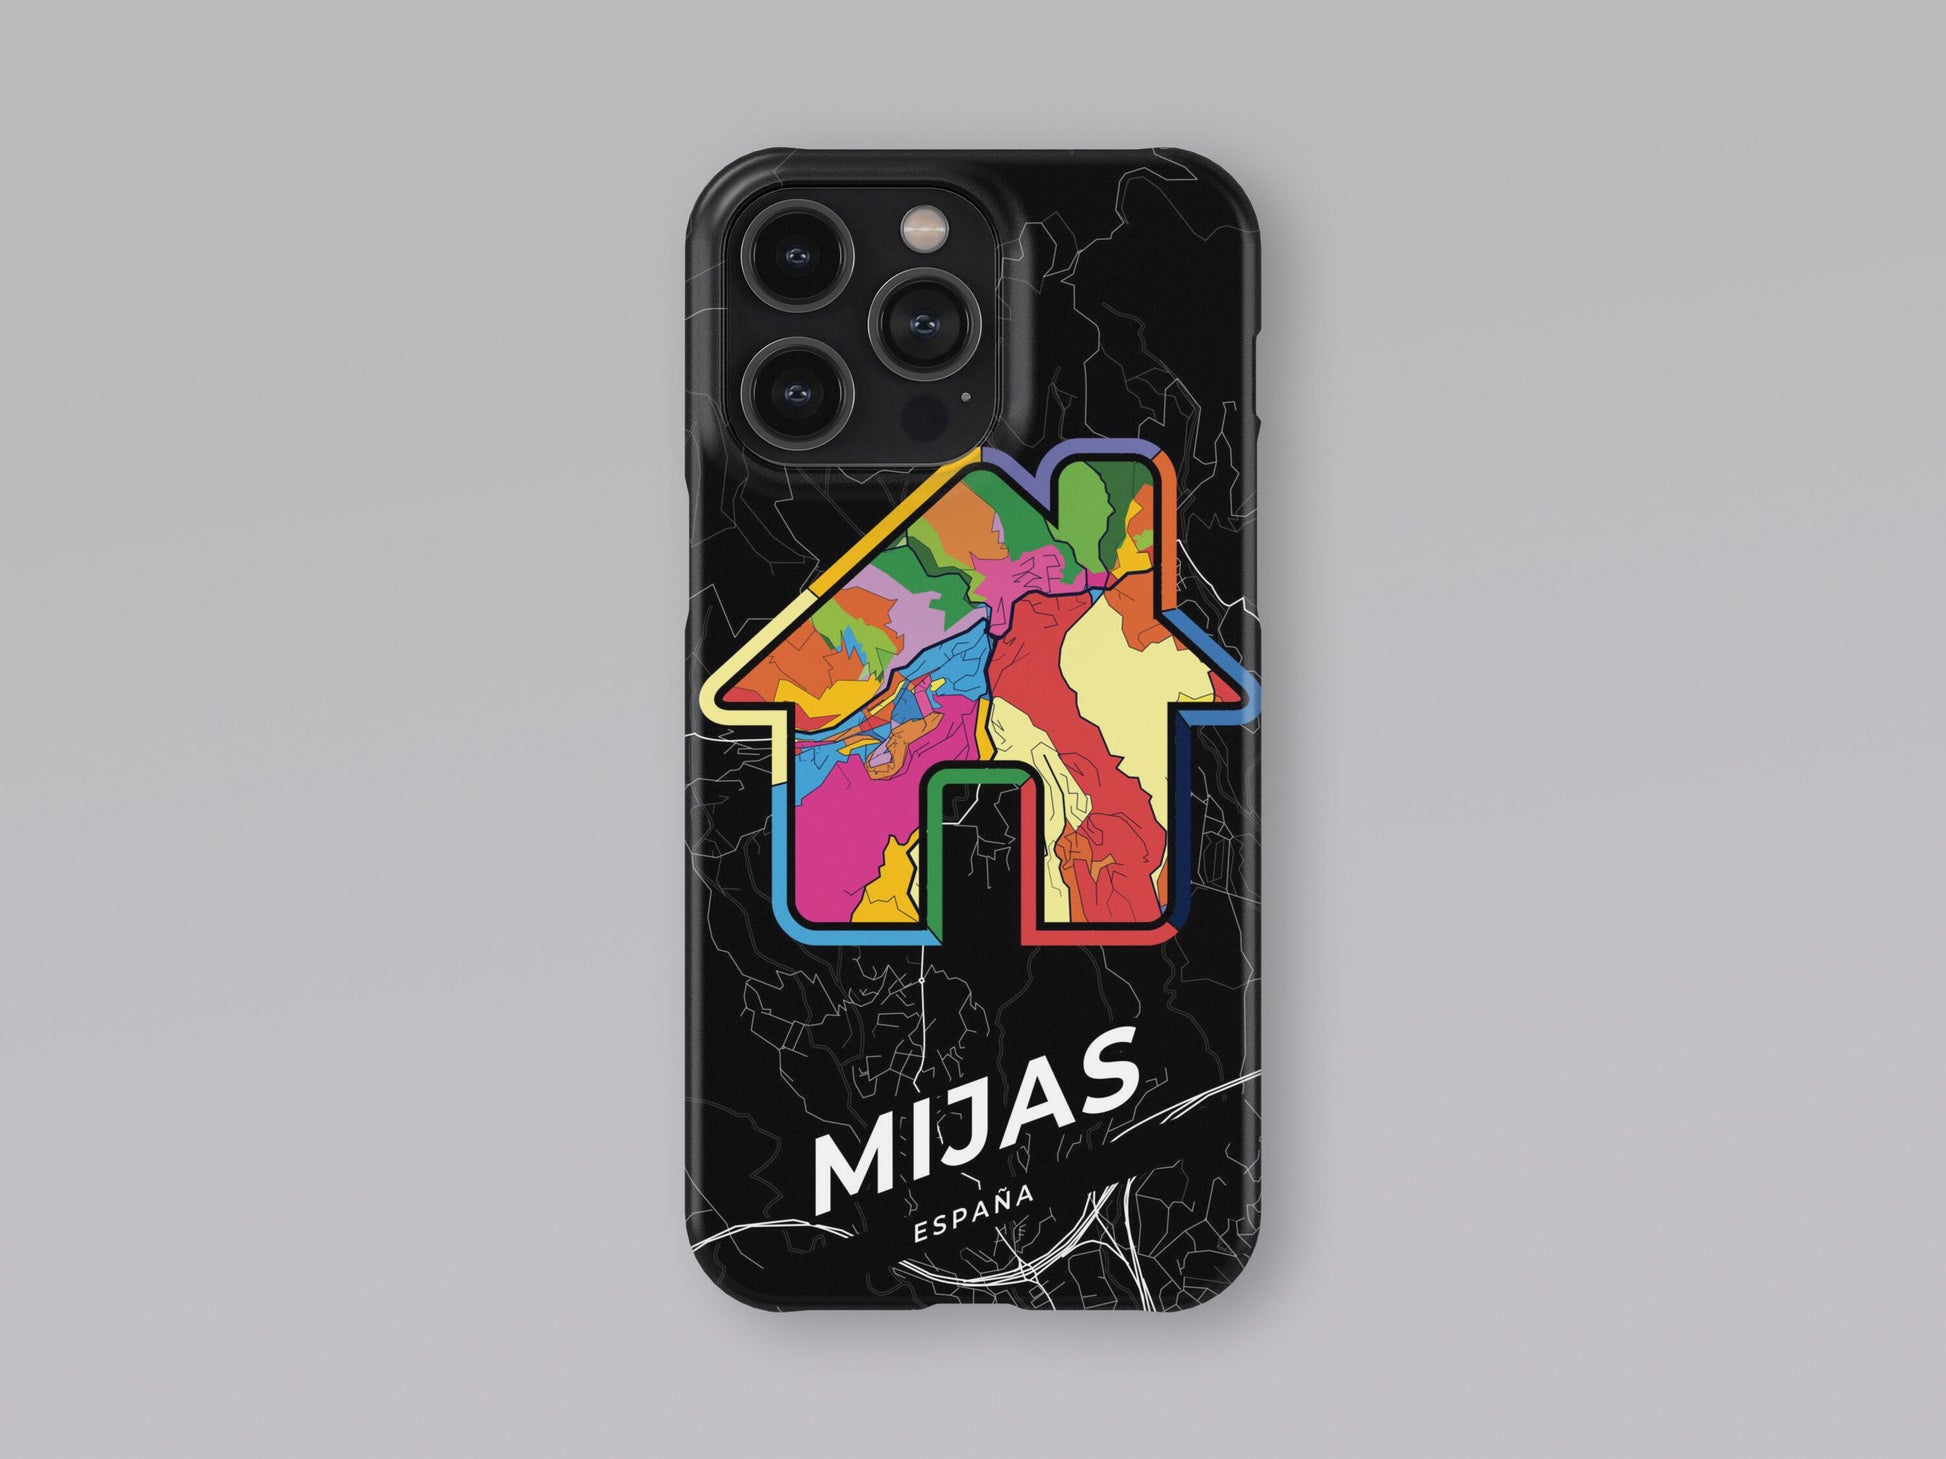 Mijas Spain slim phone case with colorful icon 3